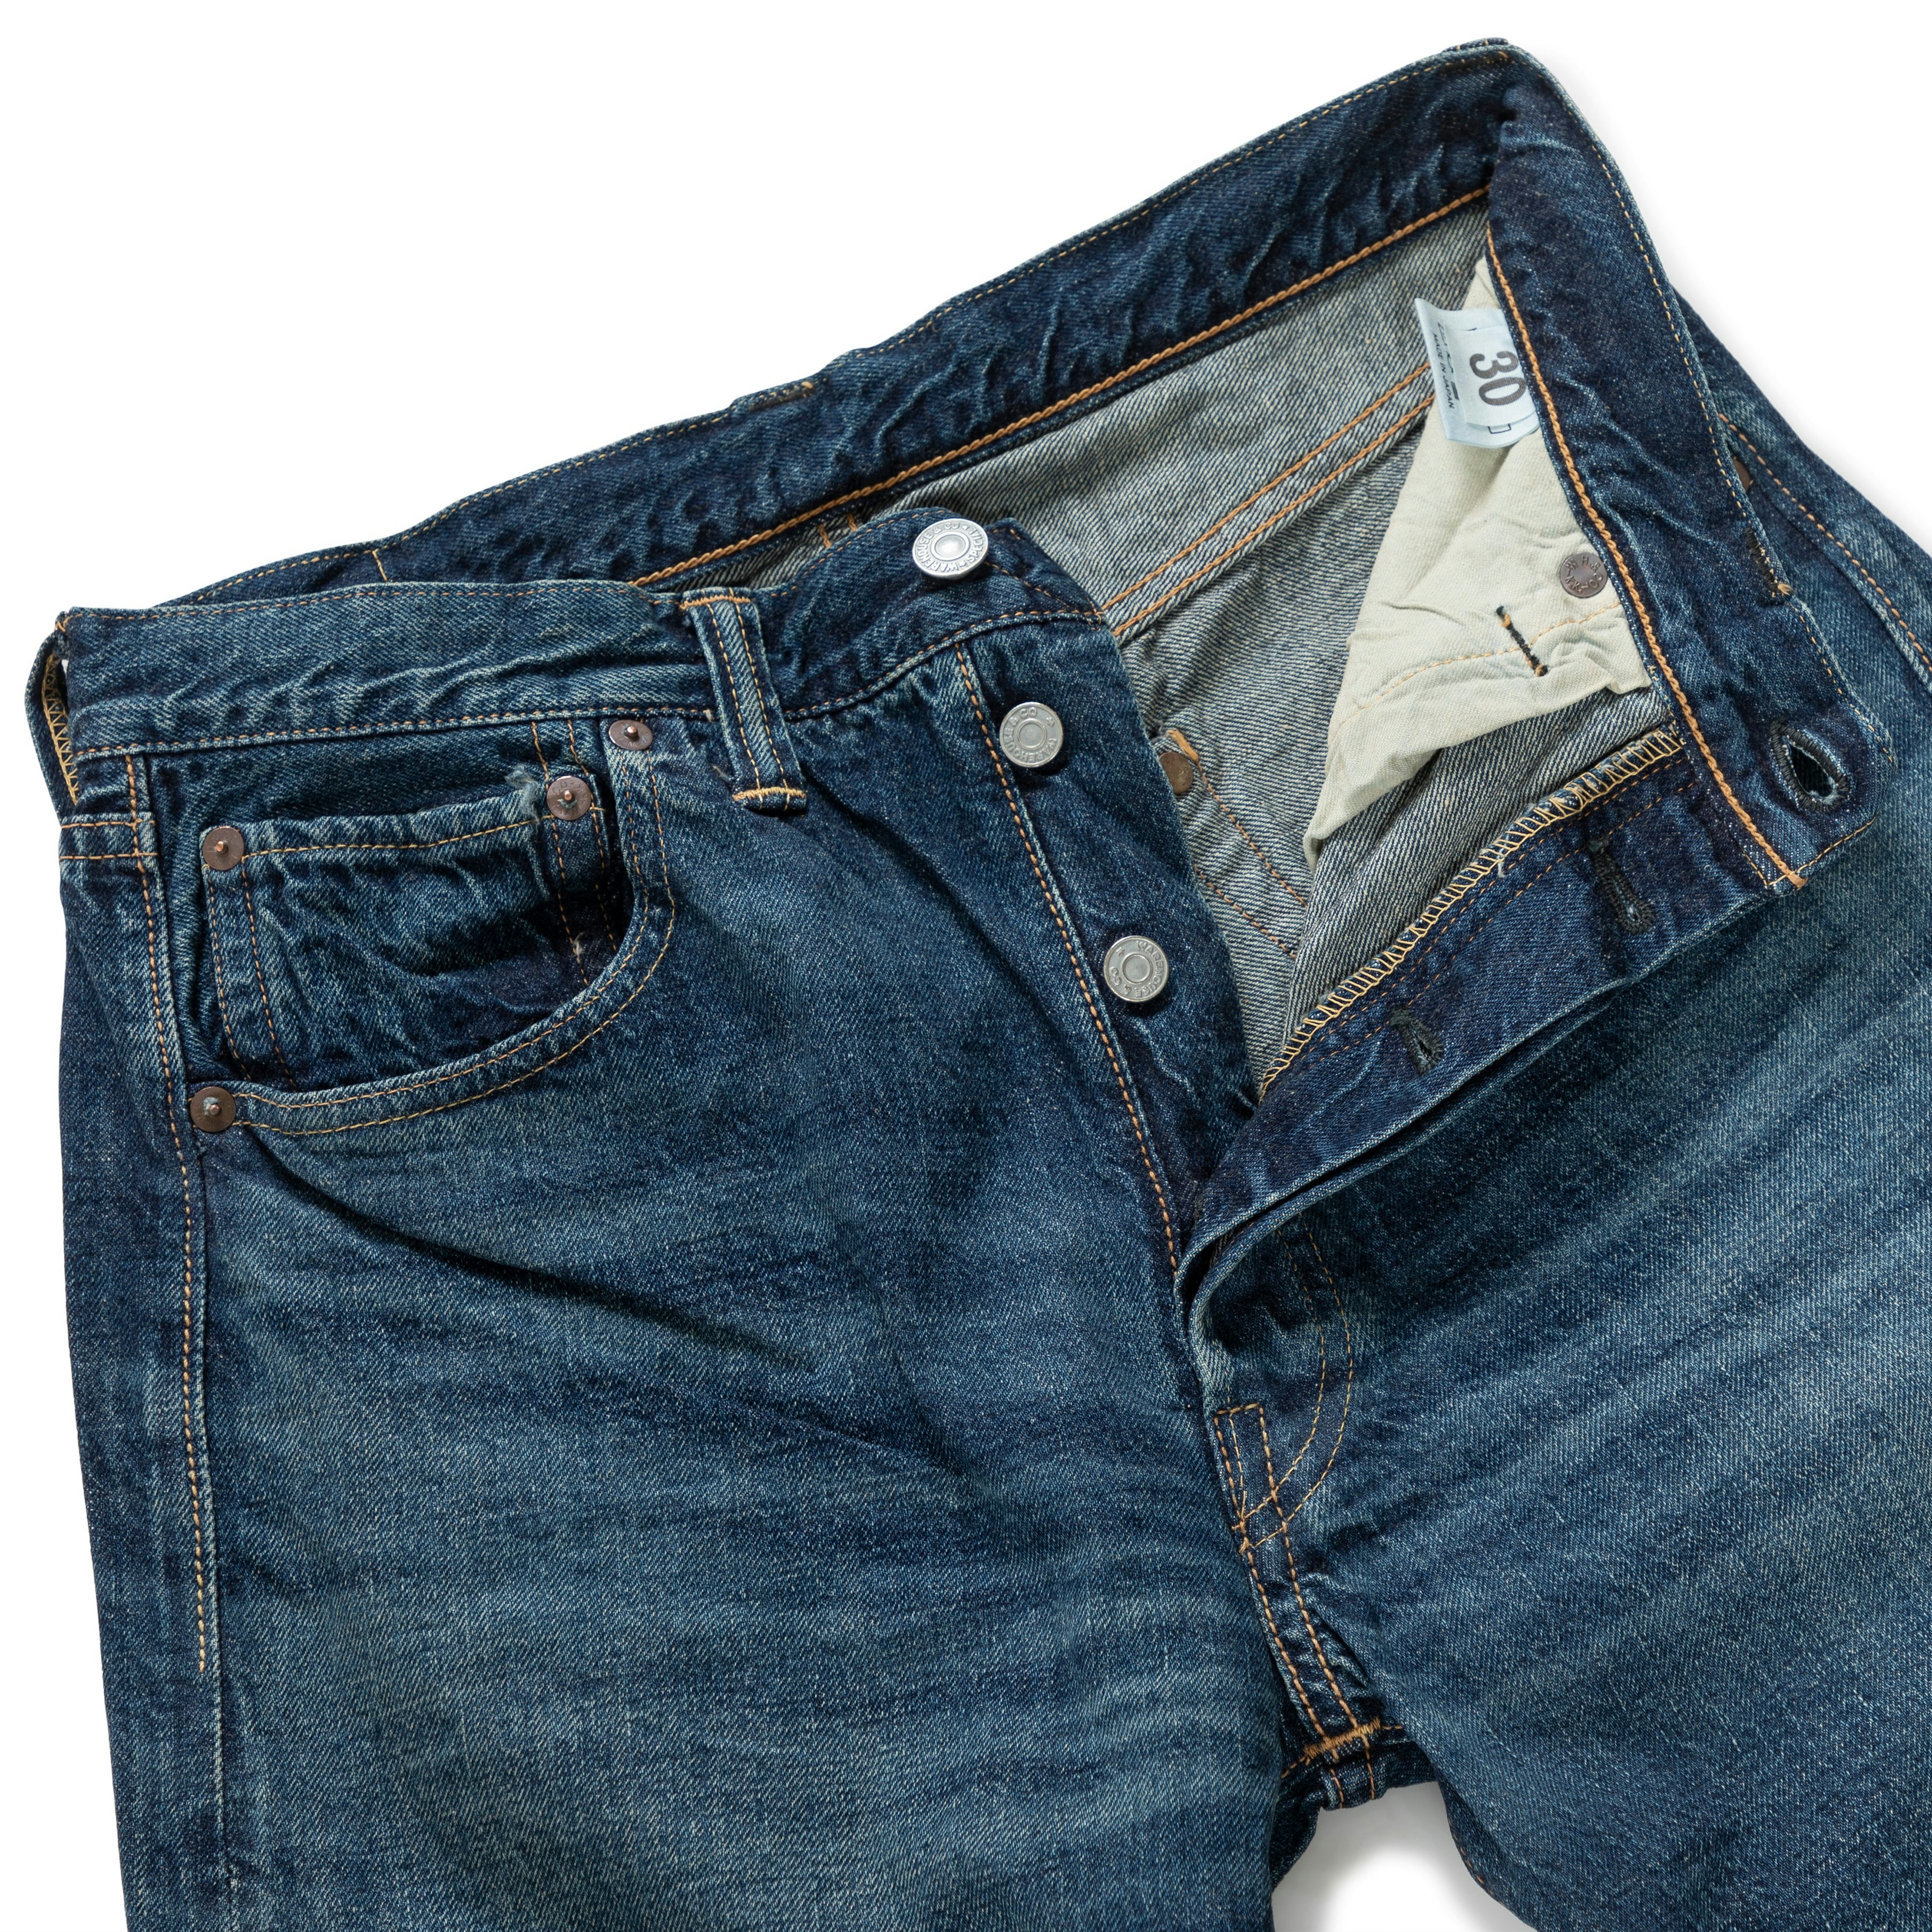 Jeans Pocket Armoury 5 - Denim The